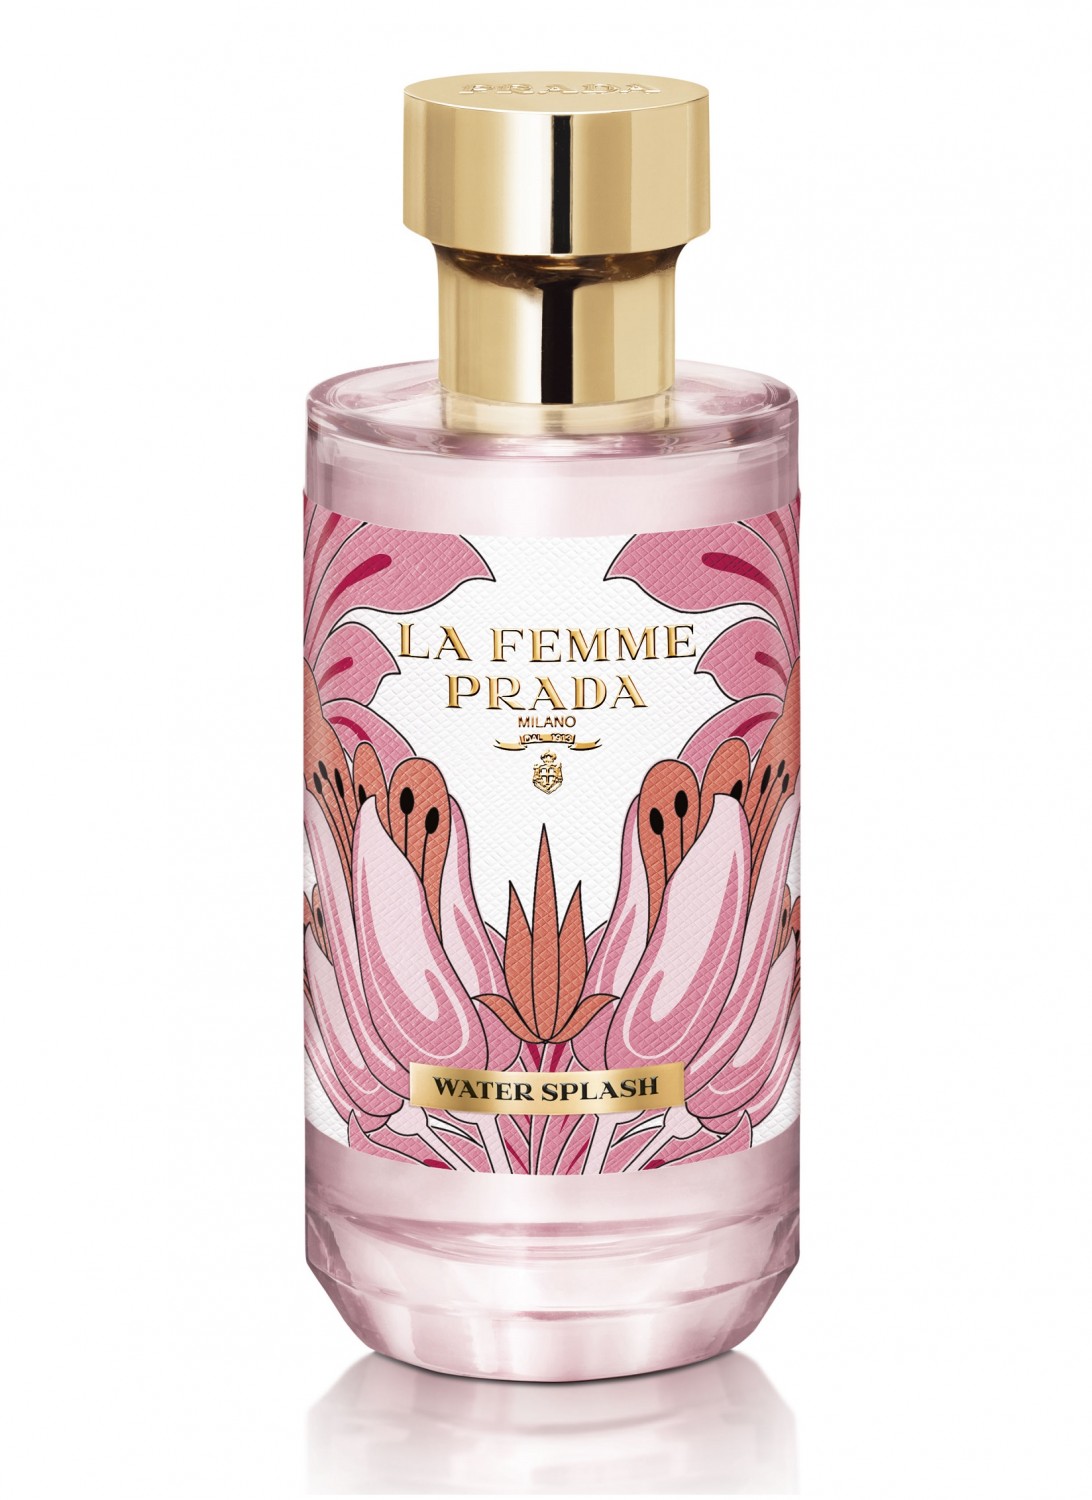 La Femme Prada Water Splash Perfume